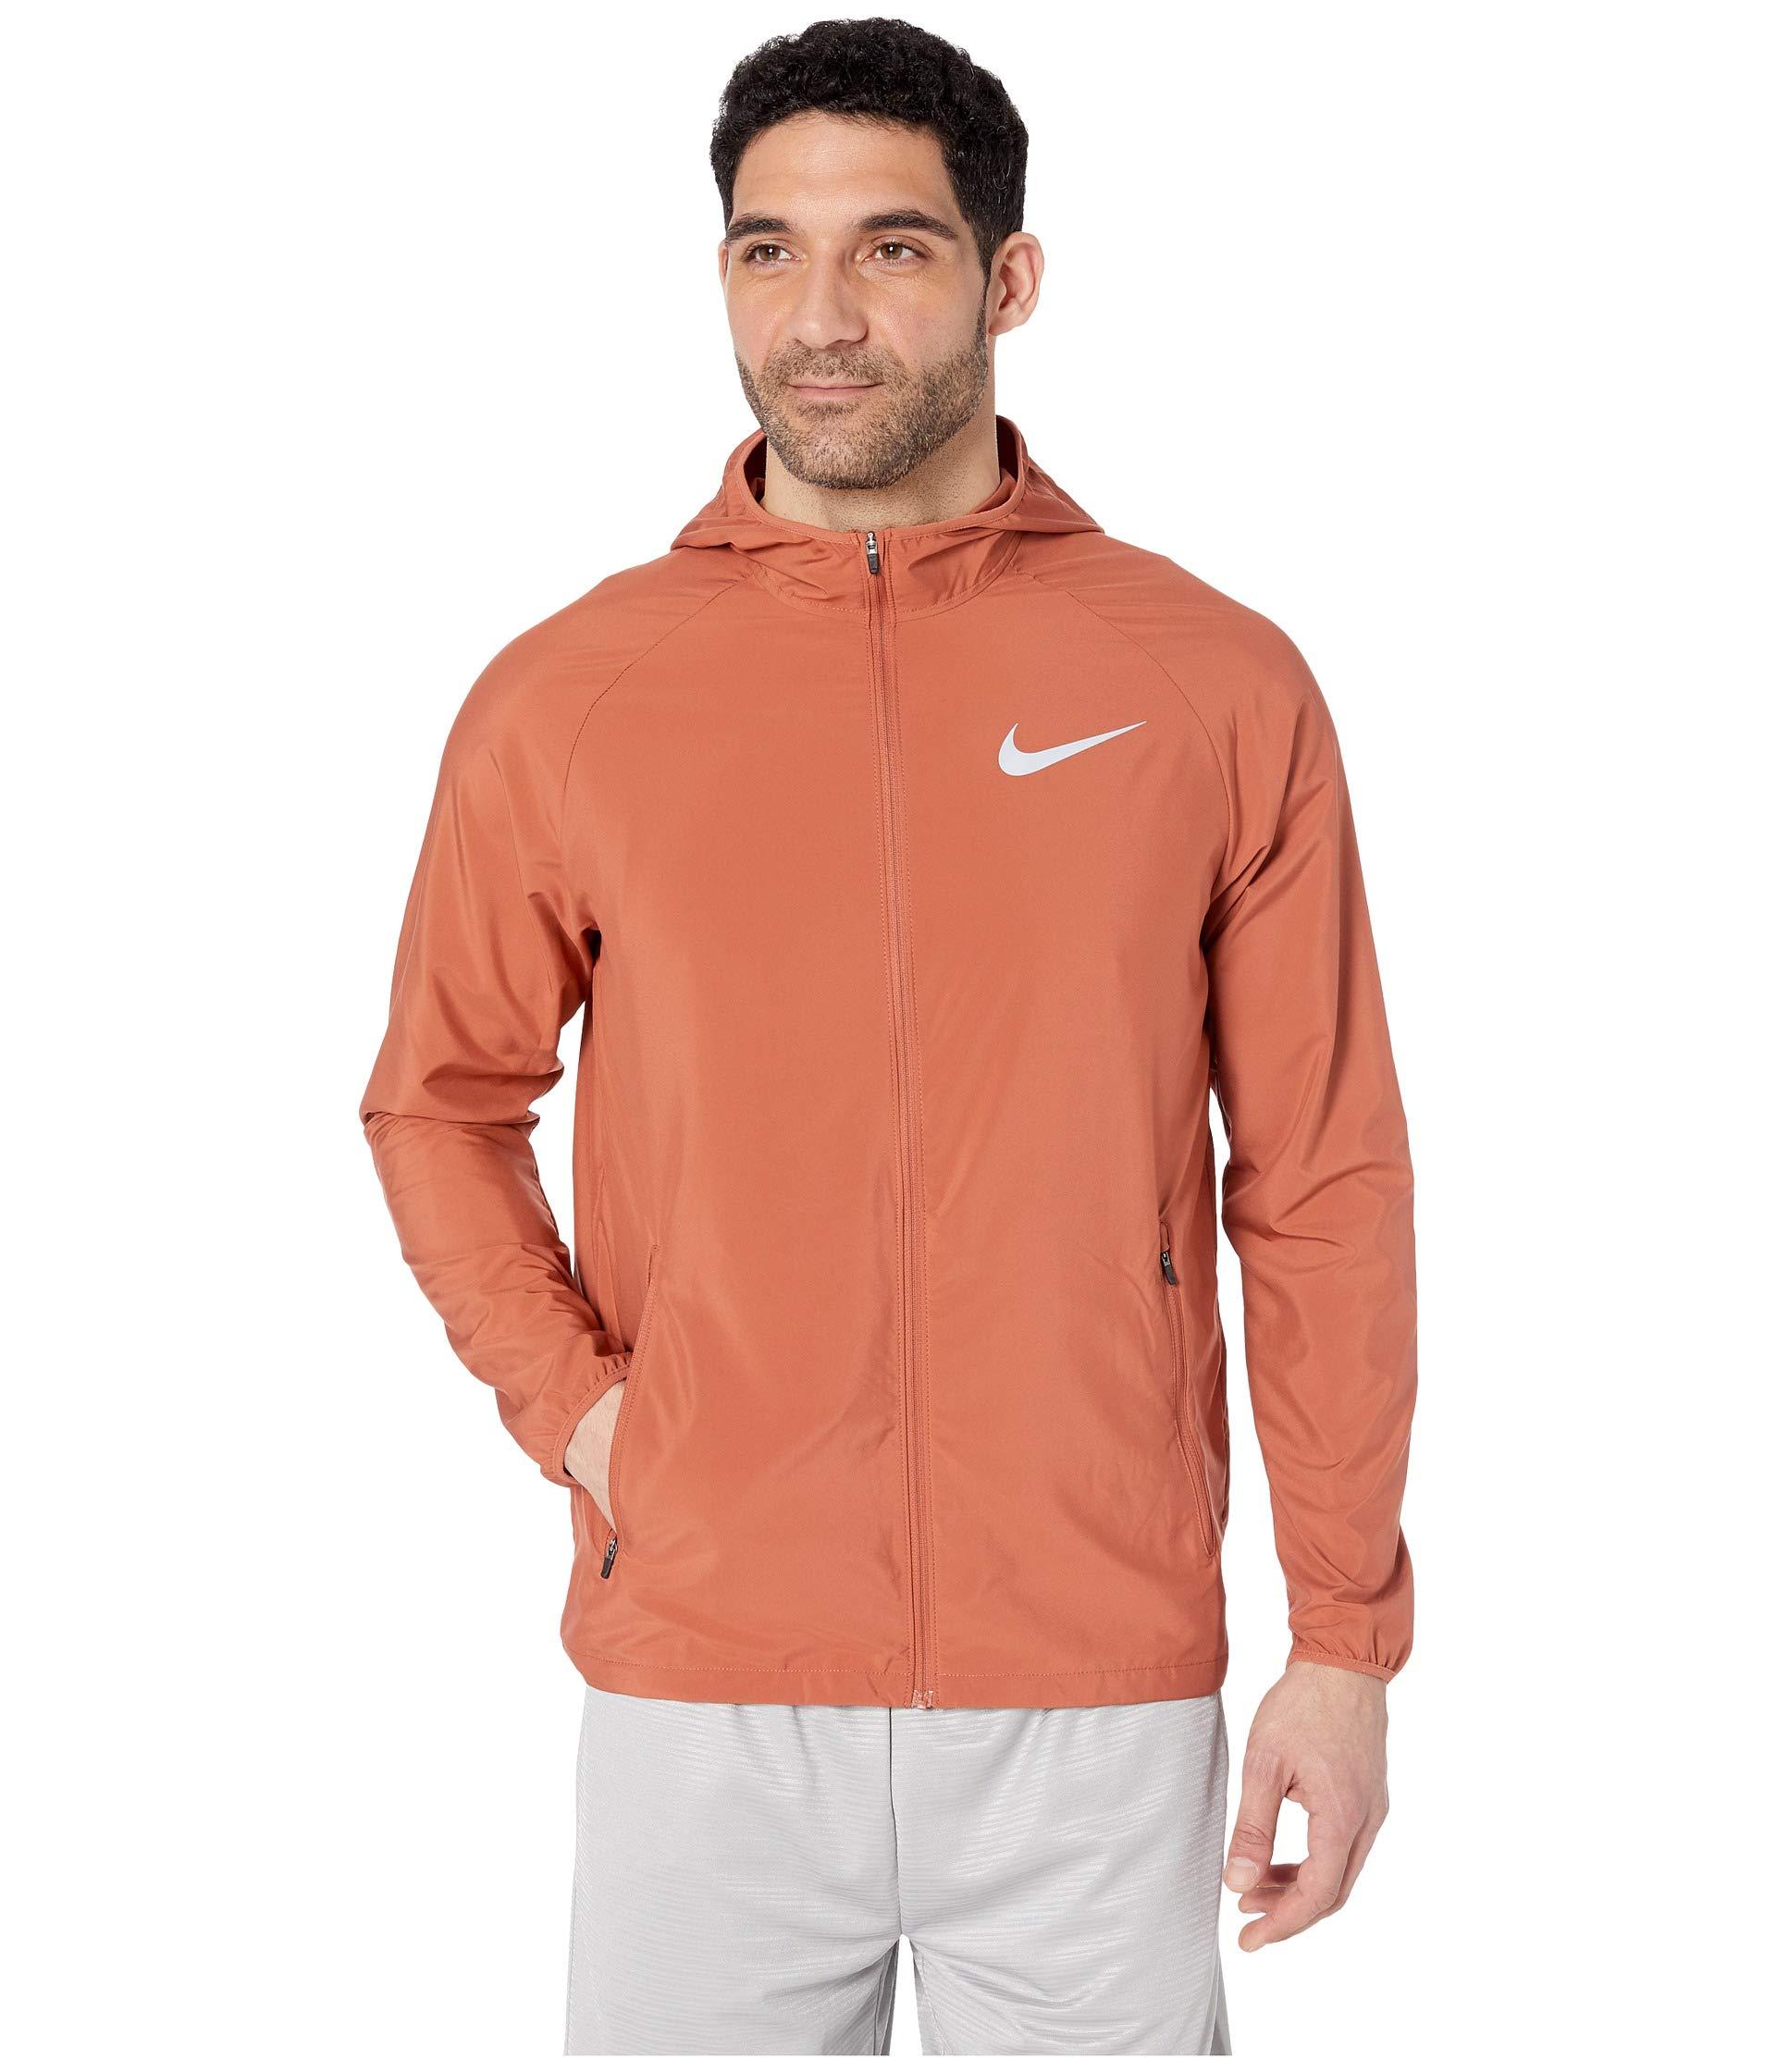 essential hooded running jacket nike Off 59% - yaren.com